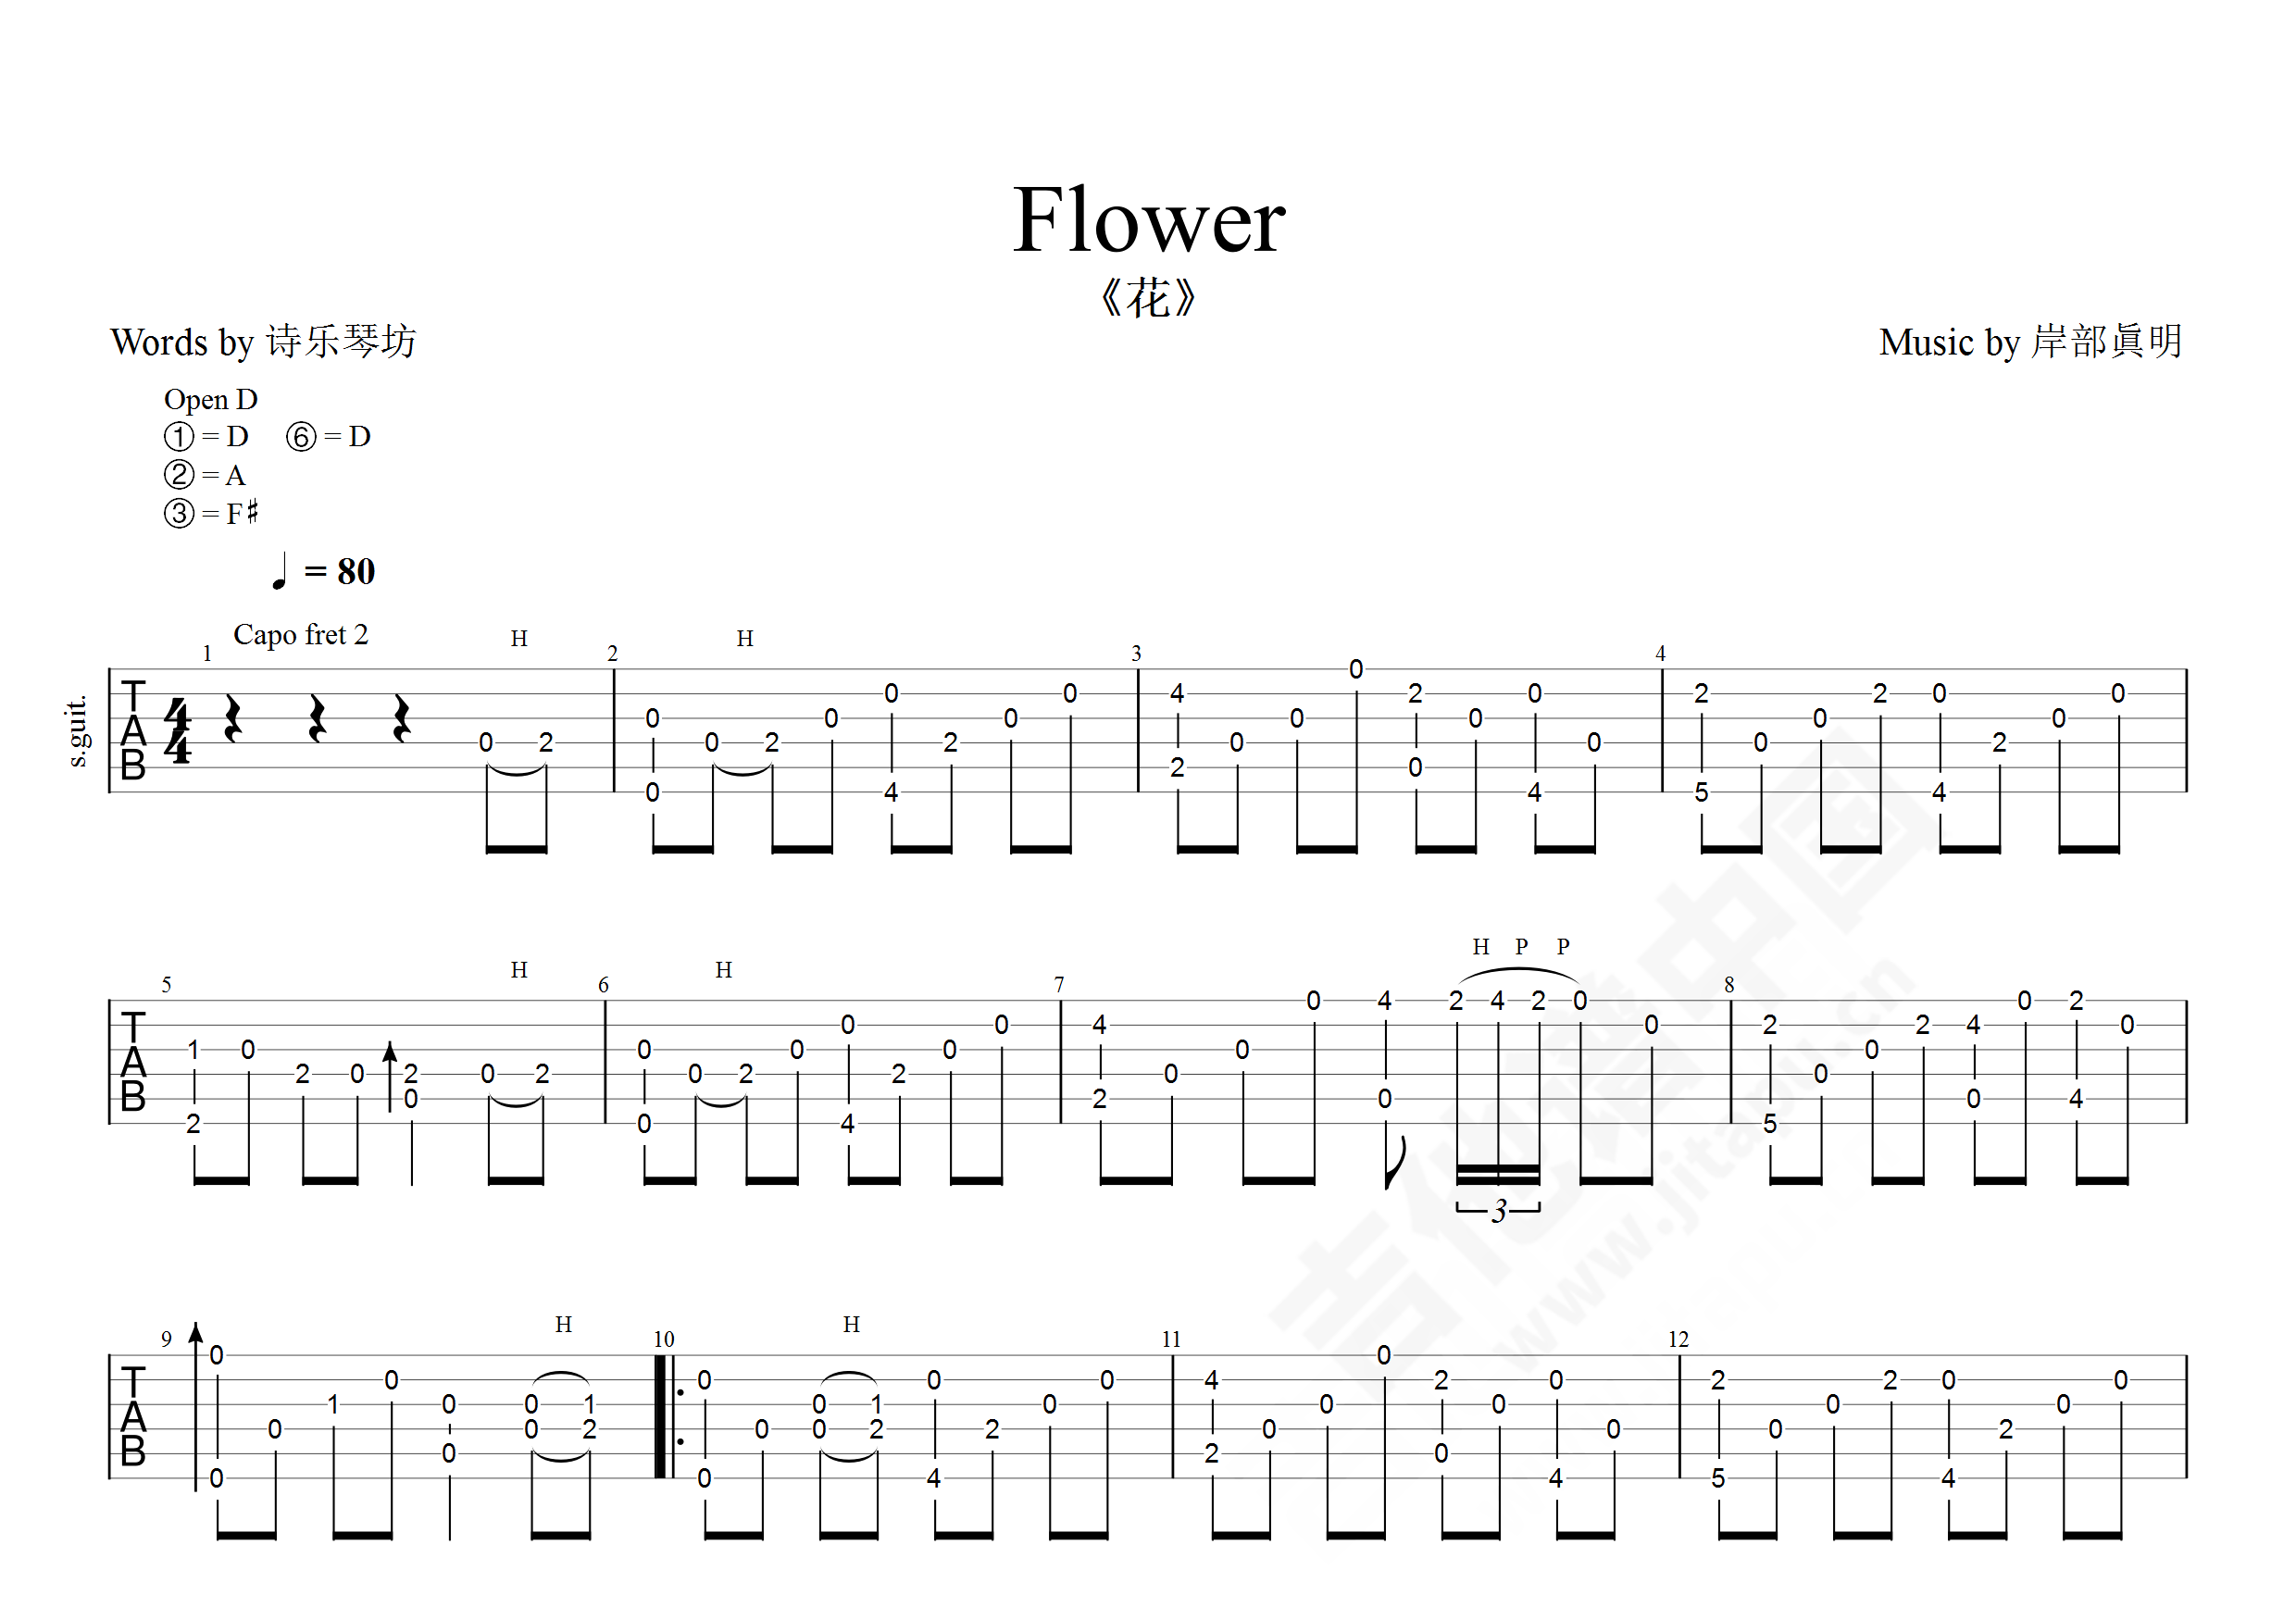 Flower吉他谱 - 岸部真明 - 吉他独奏谱 - 琴谱网